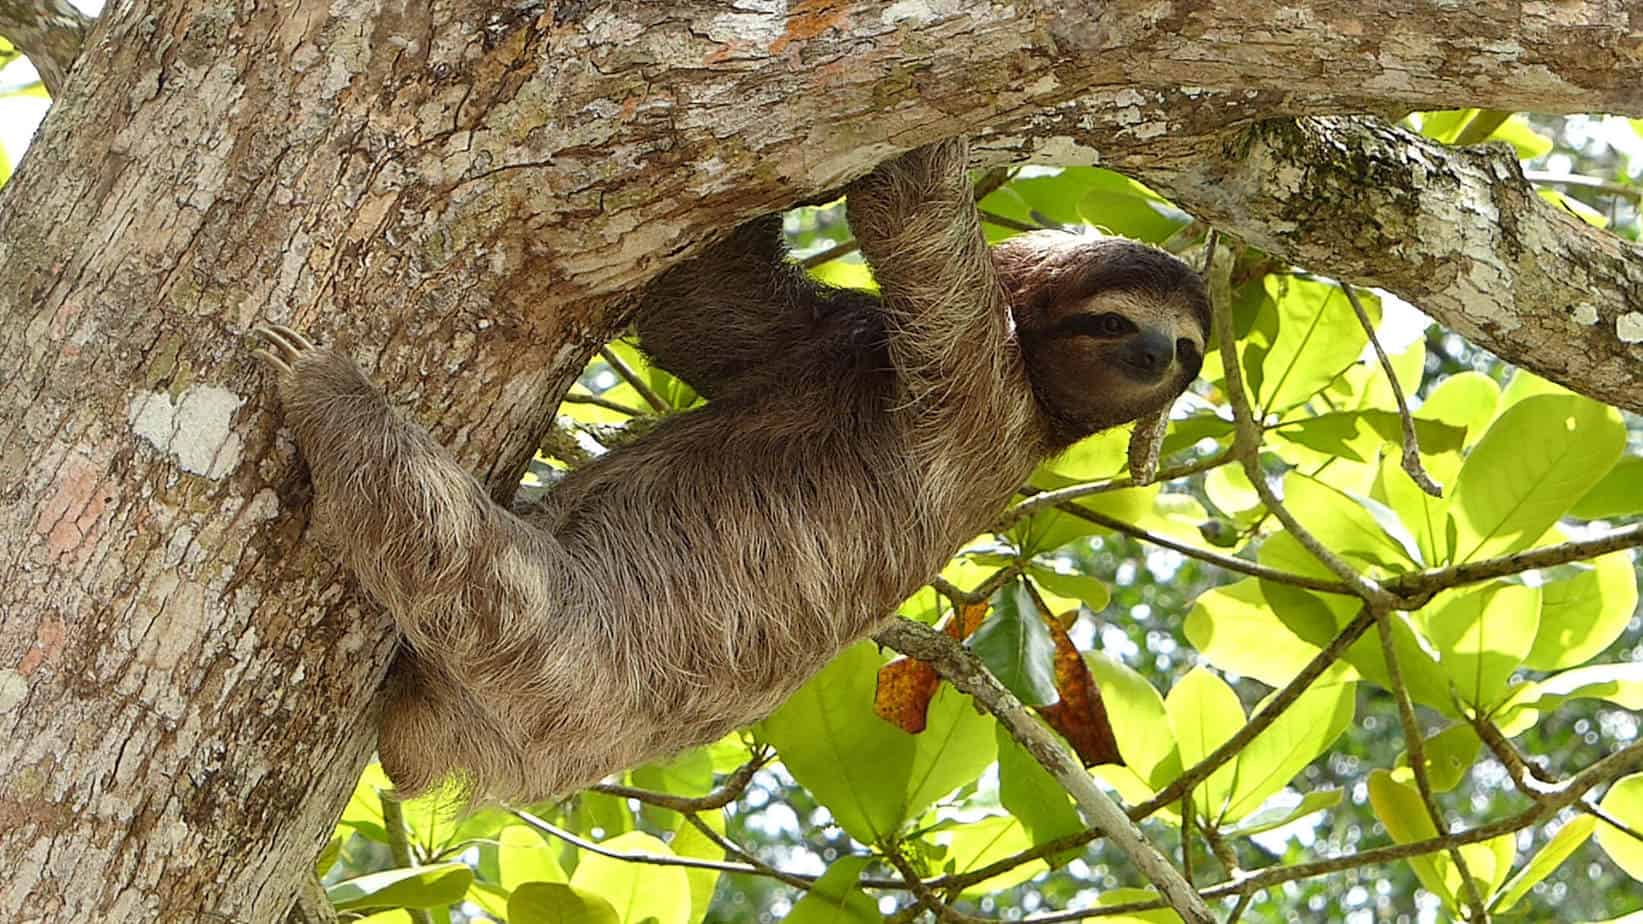 Sloth climbing a tree in Costa Rica, South America